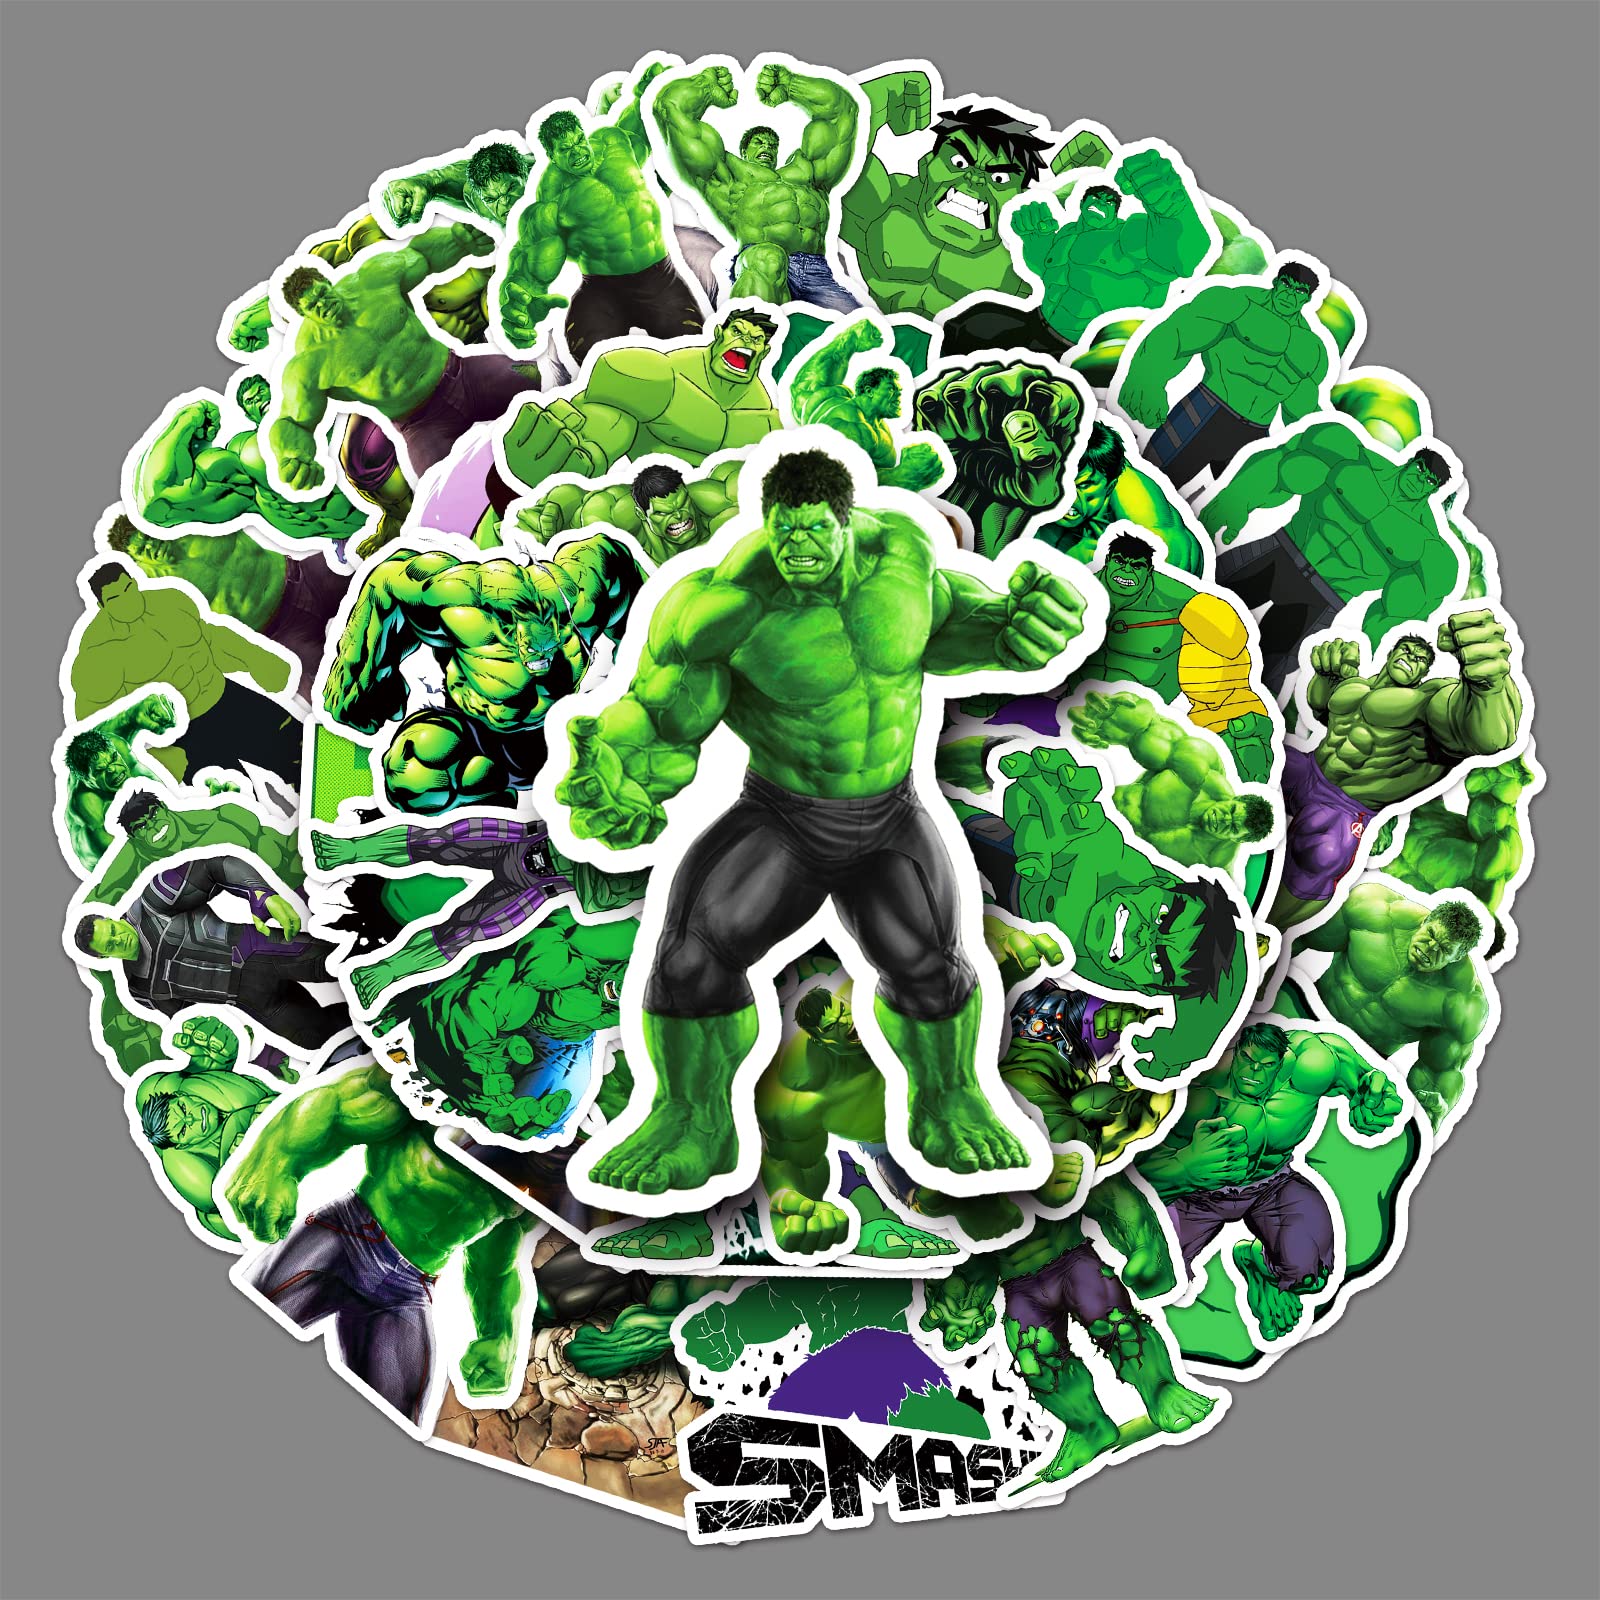 LYLSDSB Superheld Avengers Aufkleber 50 Stück Marvel Hulk Aufkleber Vinyl Grün Aufkleber für Laptop Skateboard Gepäck Fahrrad Motorrad Wasserflasche iPhone Computer Aufkleber von LYLSDSB